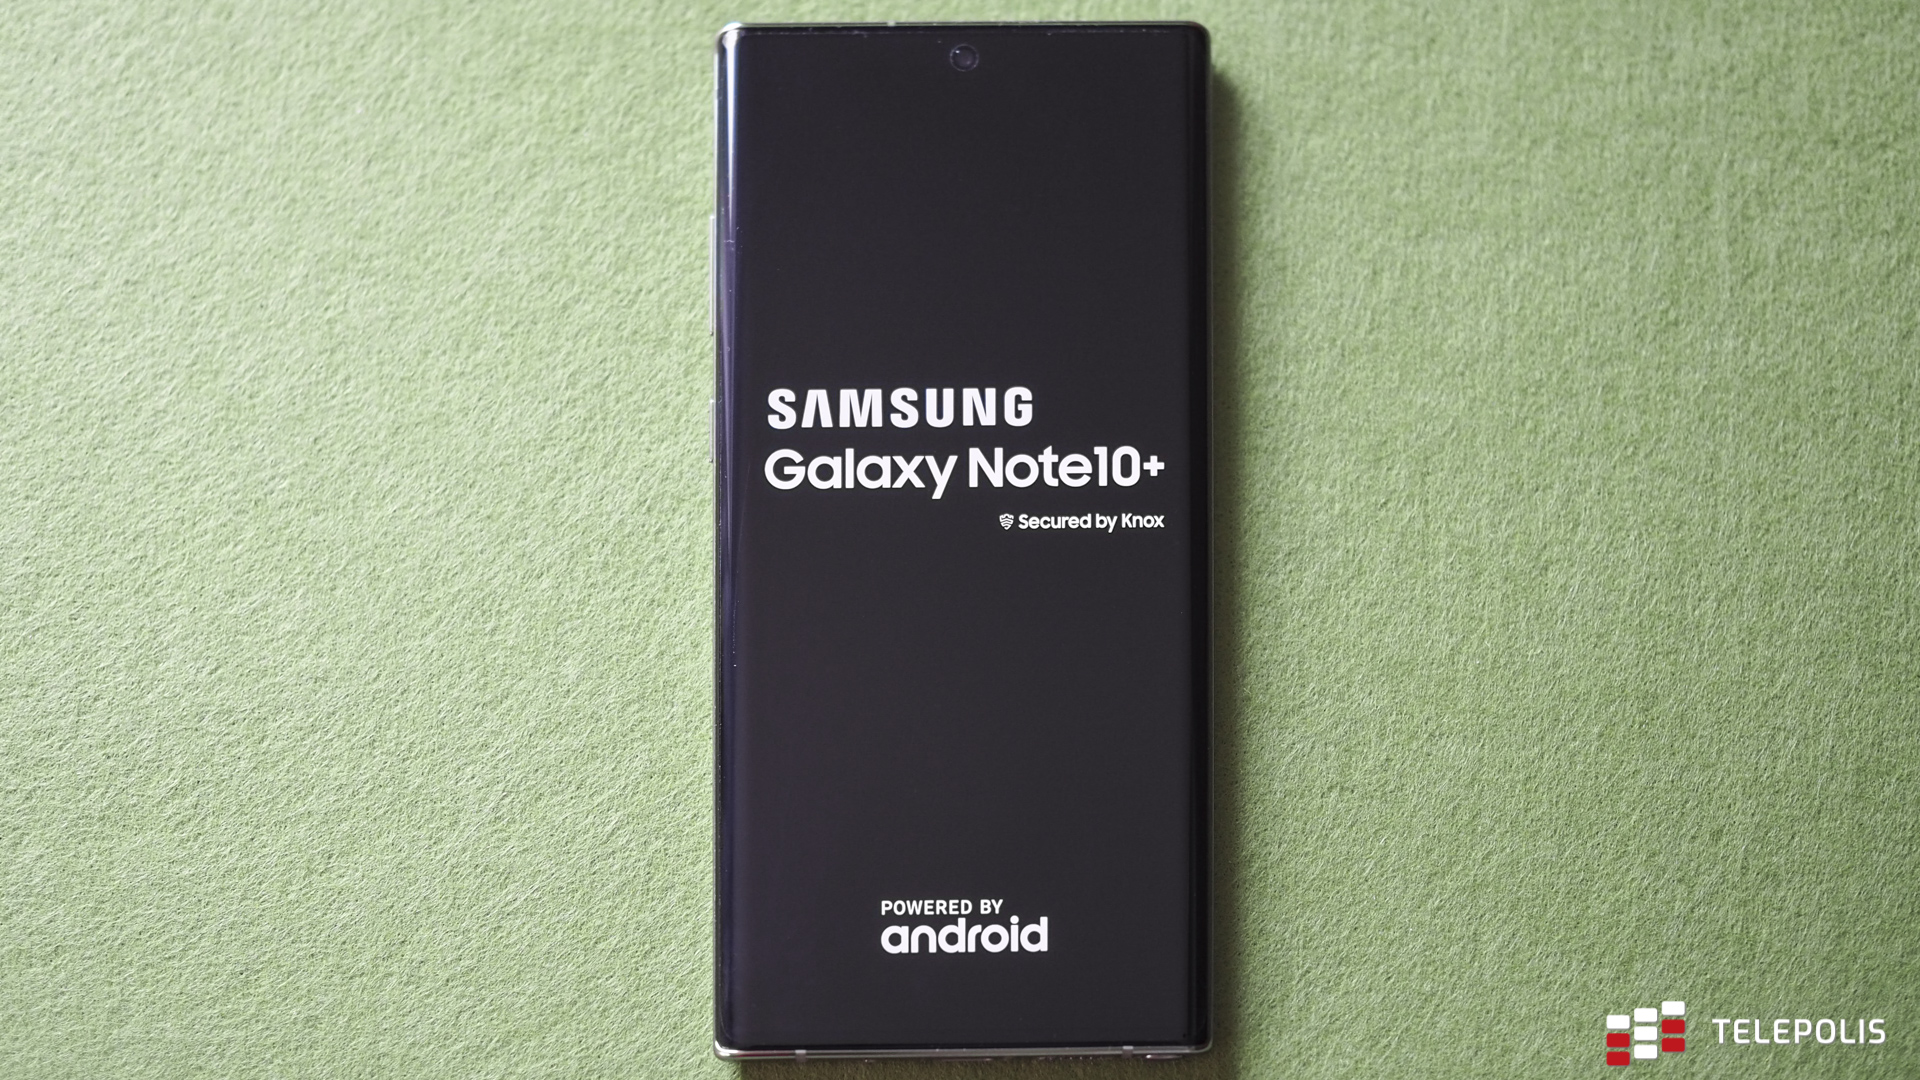 Samsung Galaxy Note10+, Samsung Knox